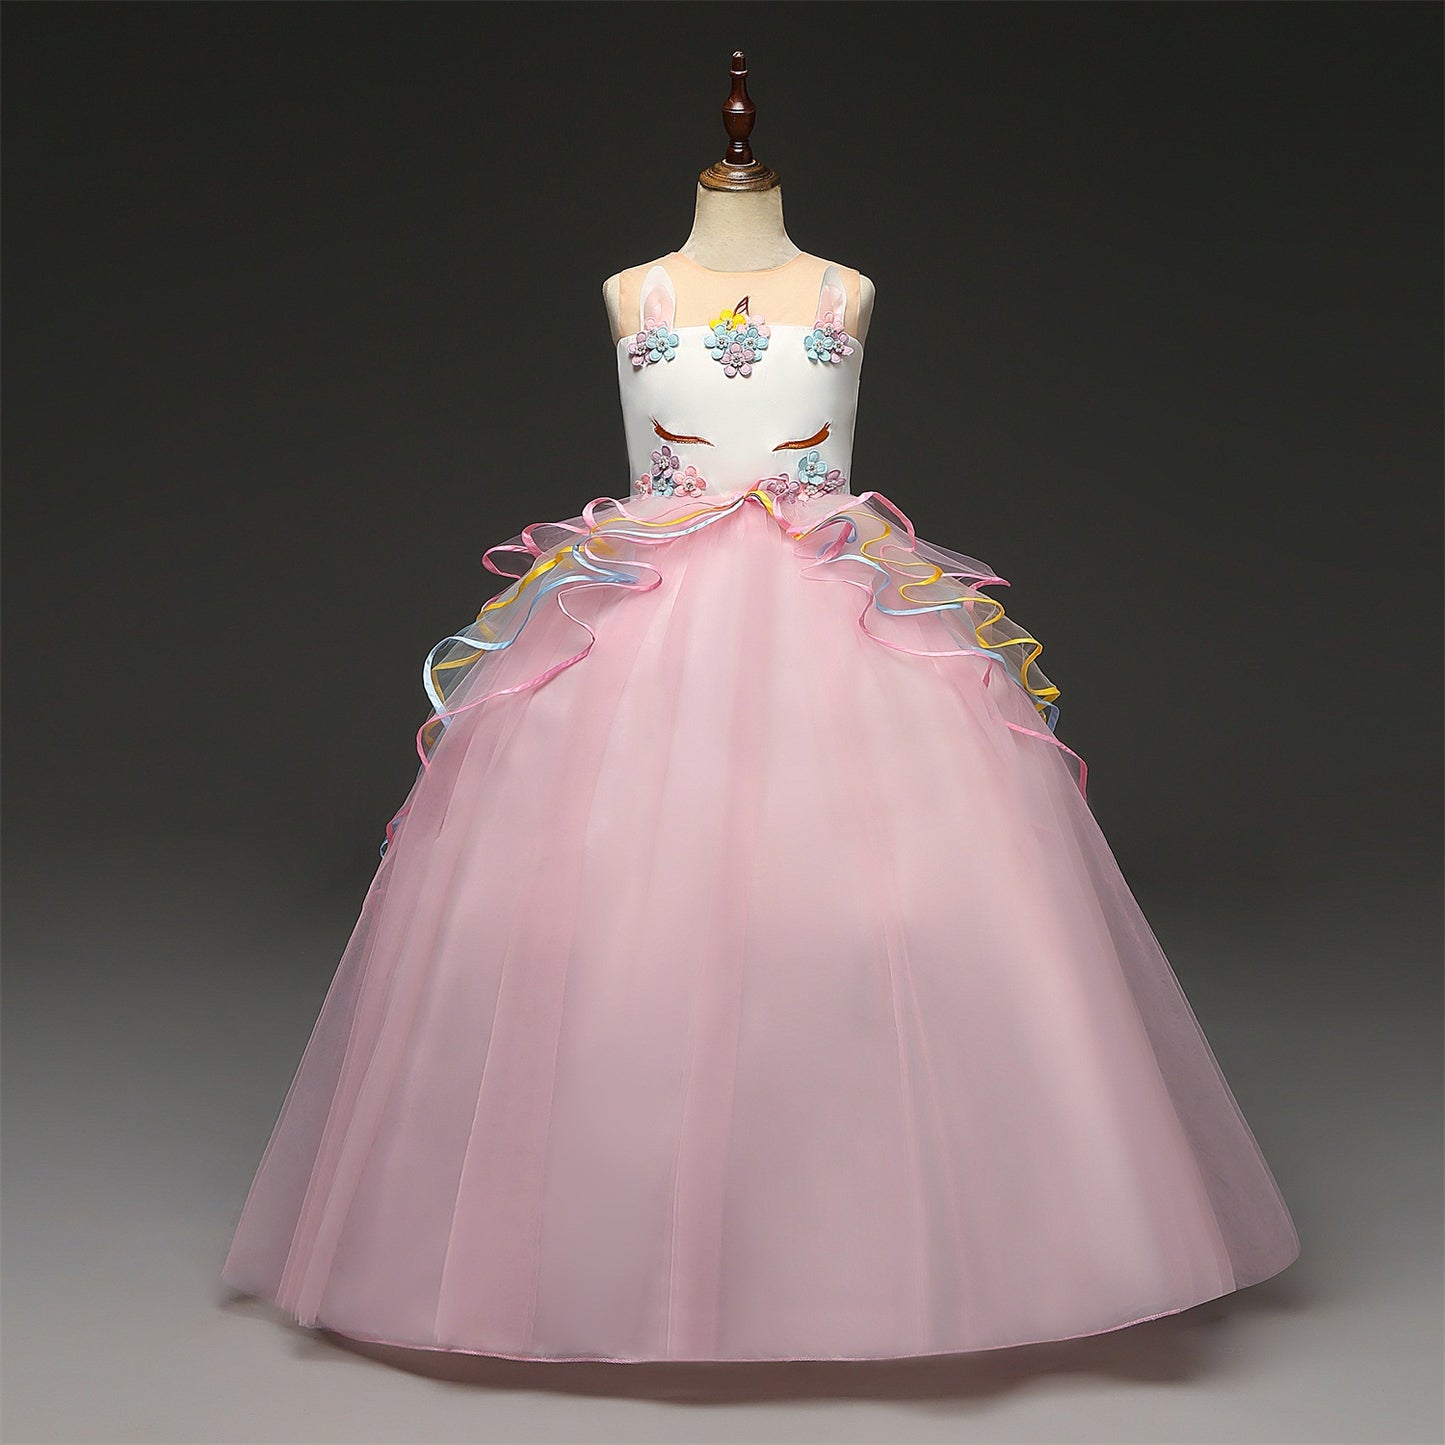 Lovely Unicorn Princess Ball Gown Dresses